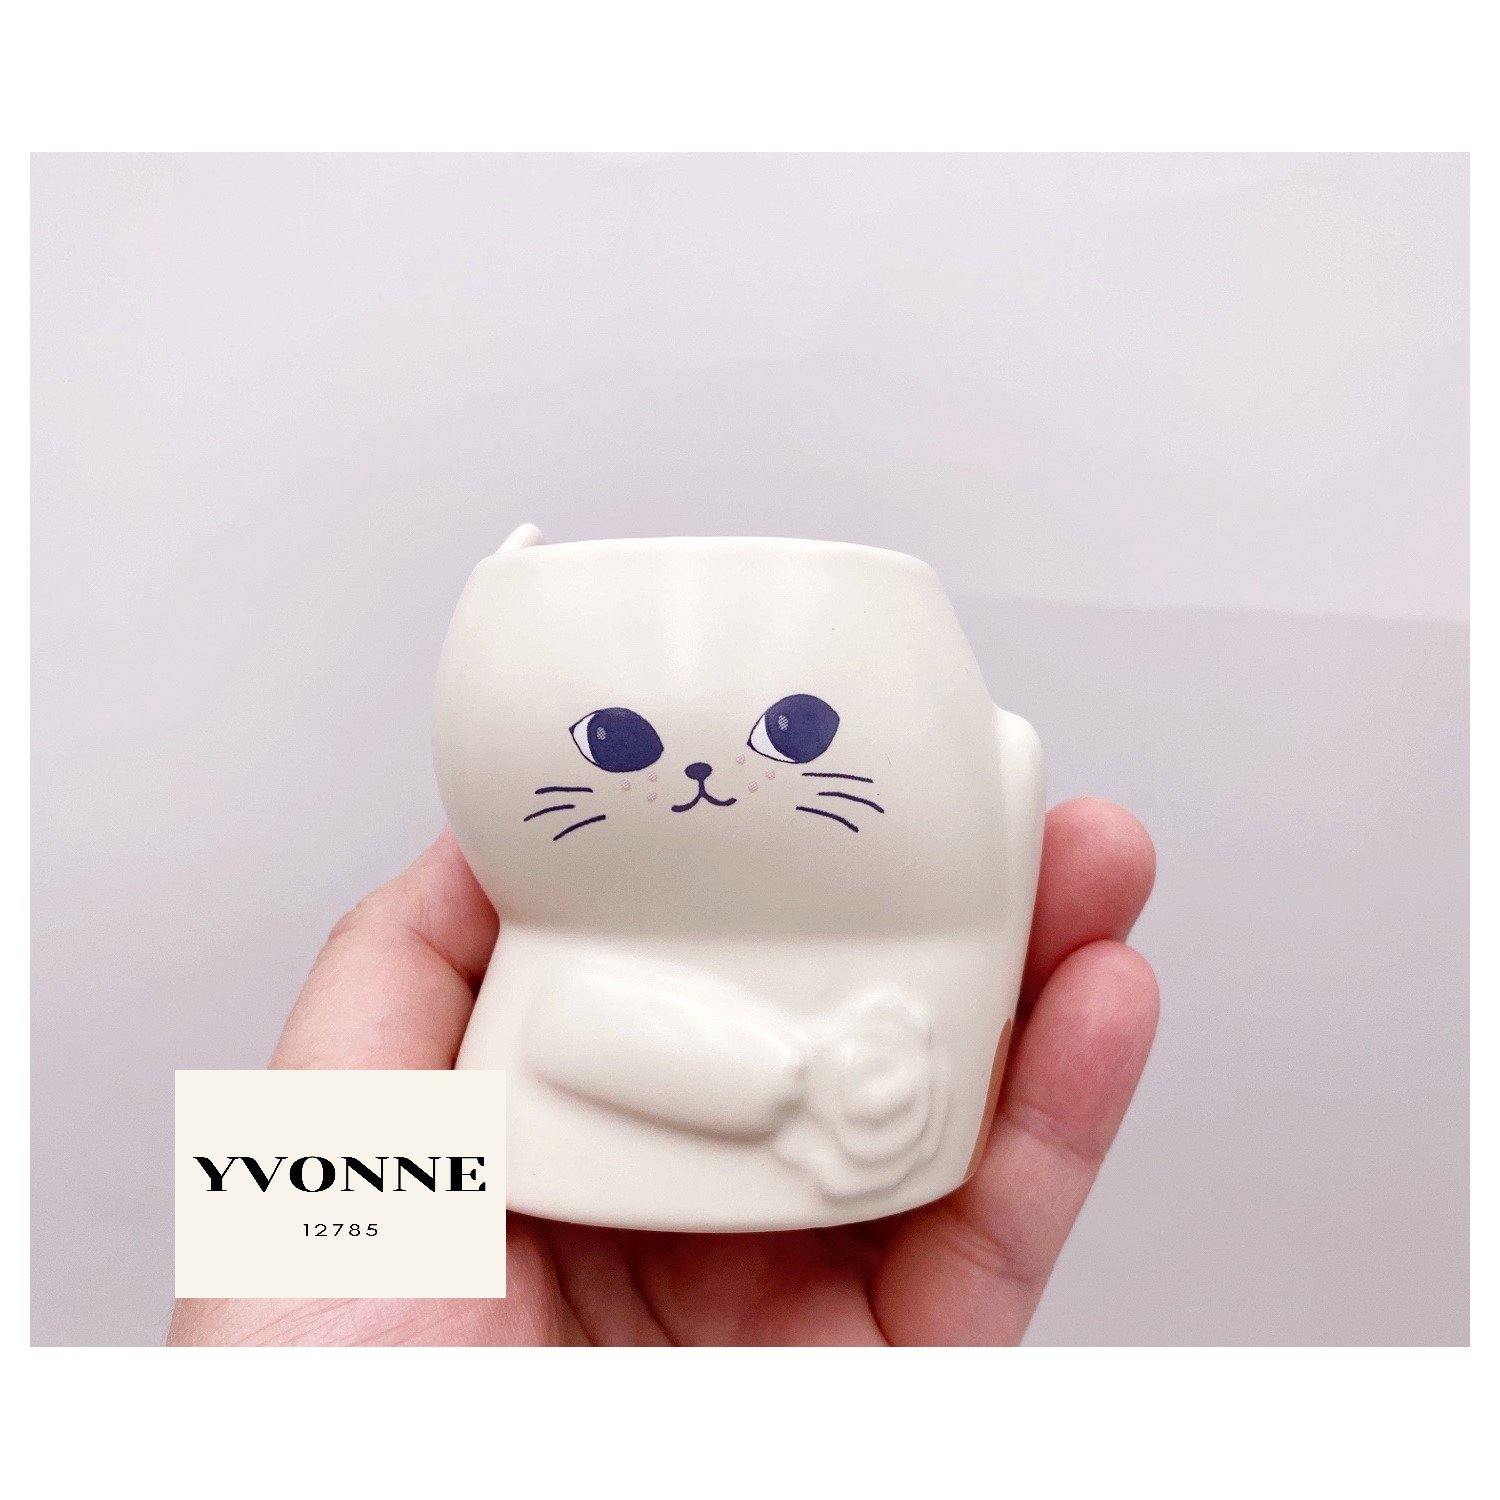 Starbucks 2020 White Ivory Crush Cat Tasting Mug 3oz Small Ceramic Cup - Yvonne12785